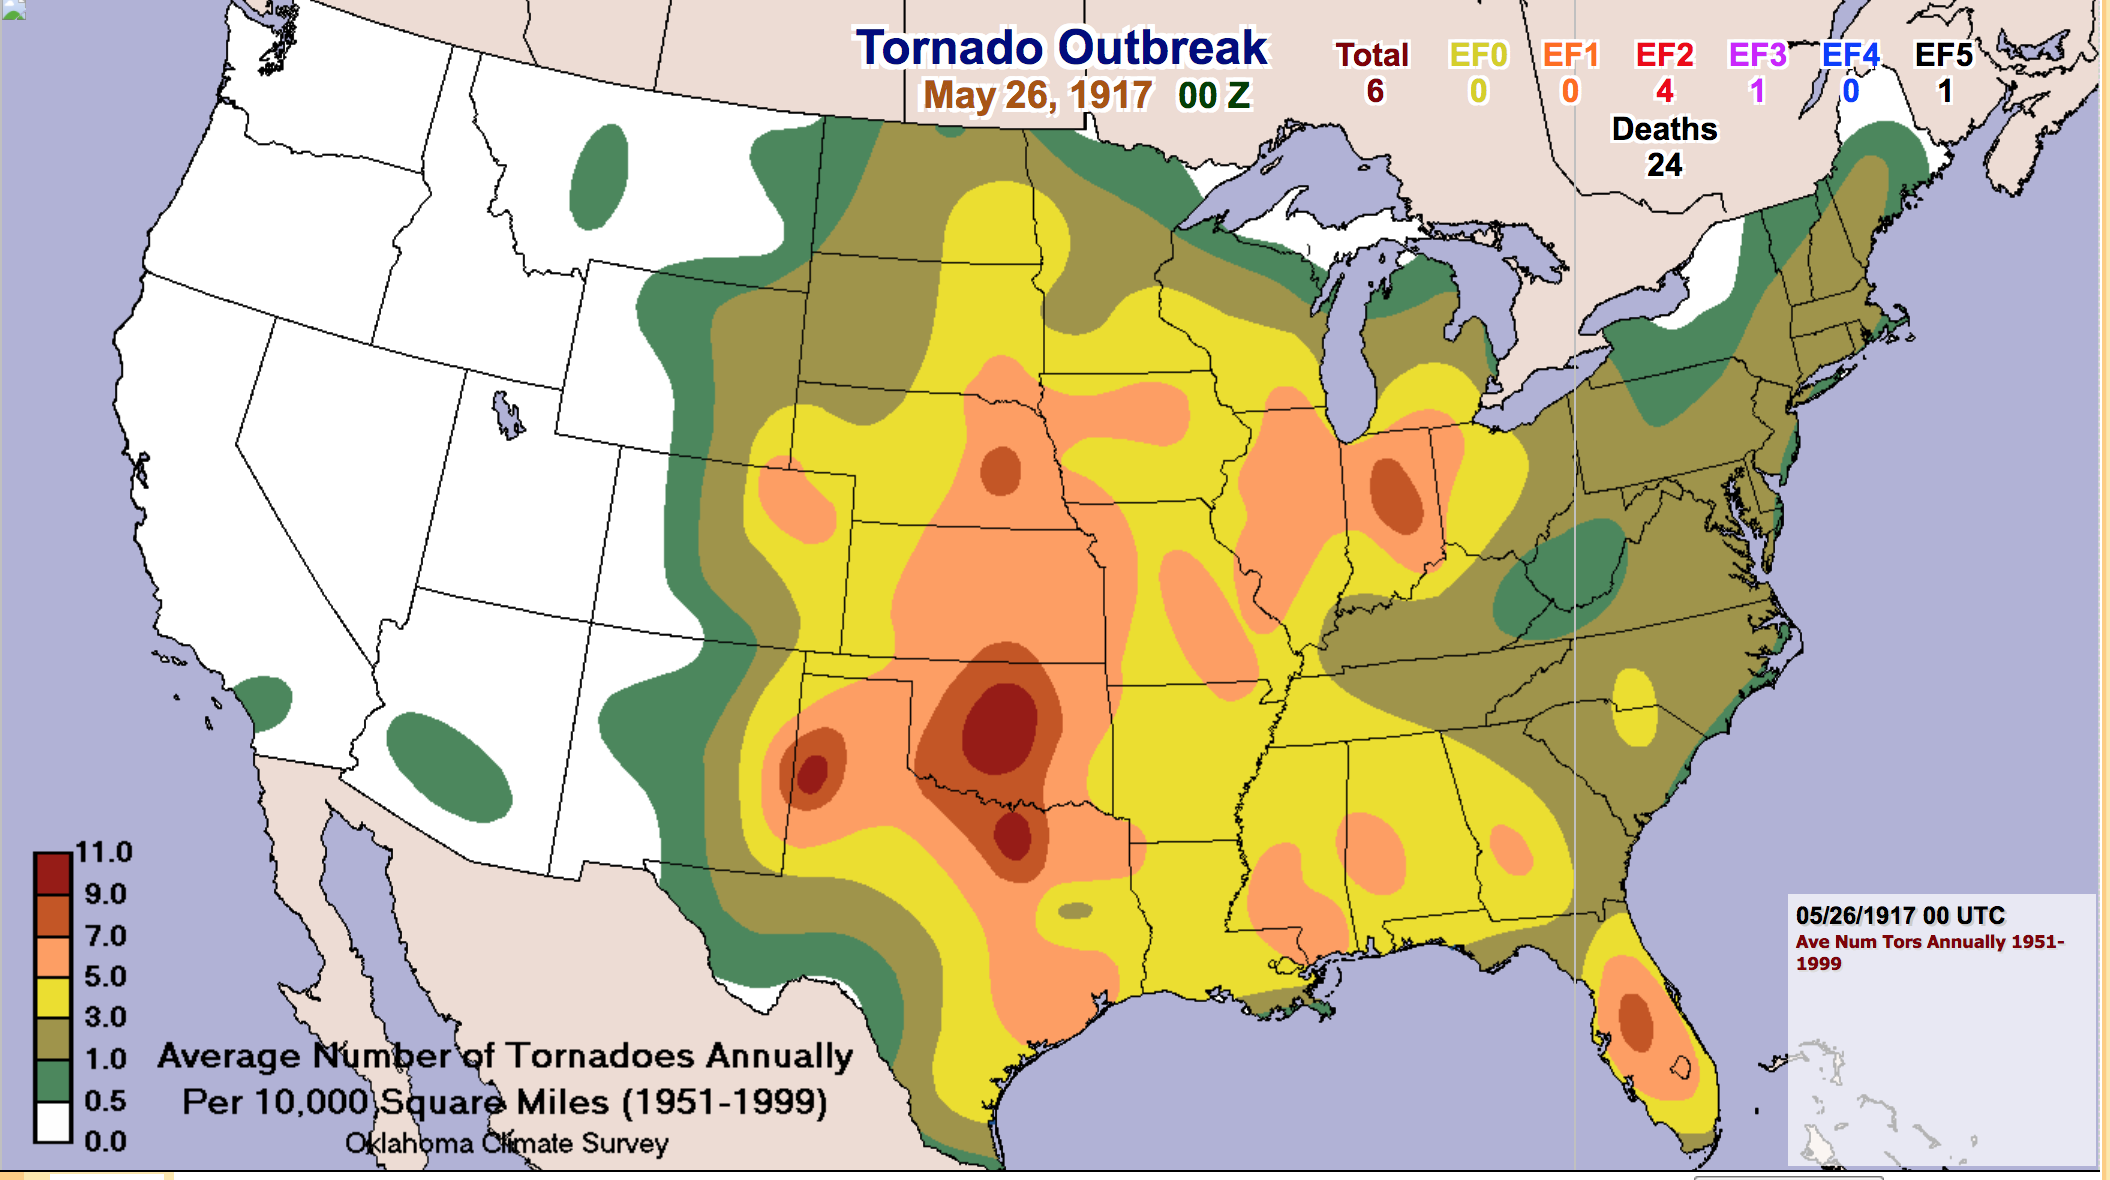 Latest Tornadoes Chart